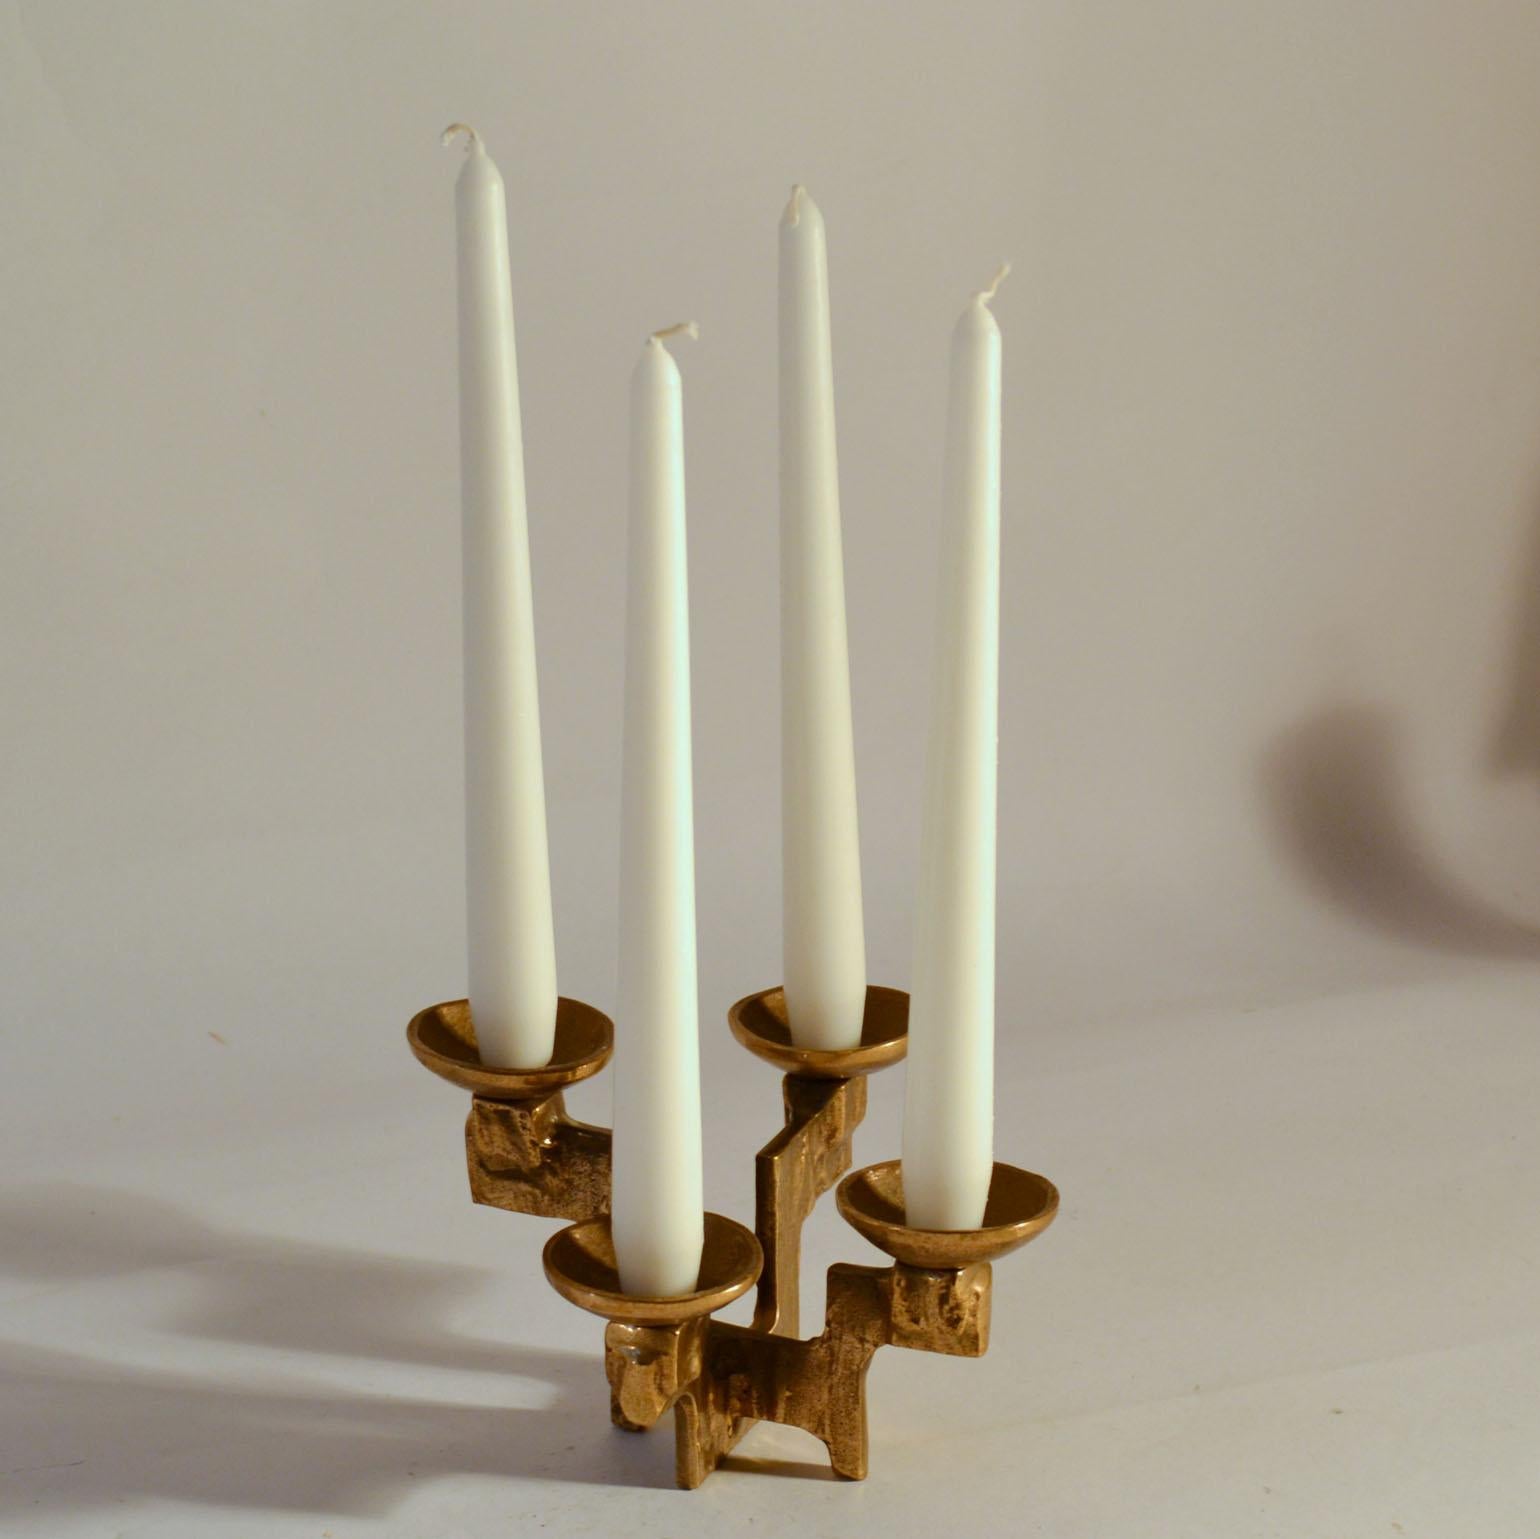 Brutalist bronze cast four arm candle holder on alternating heights original light golden patina for regular or fat candles (3-4 cm wide) with.